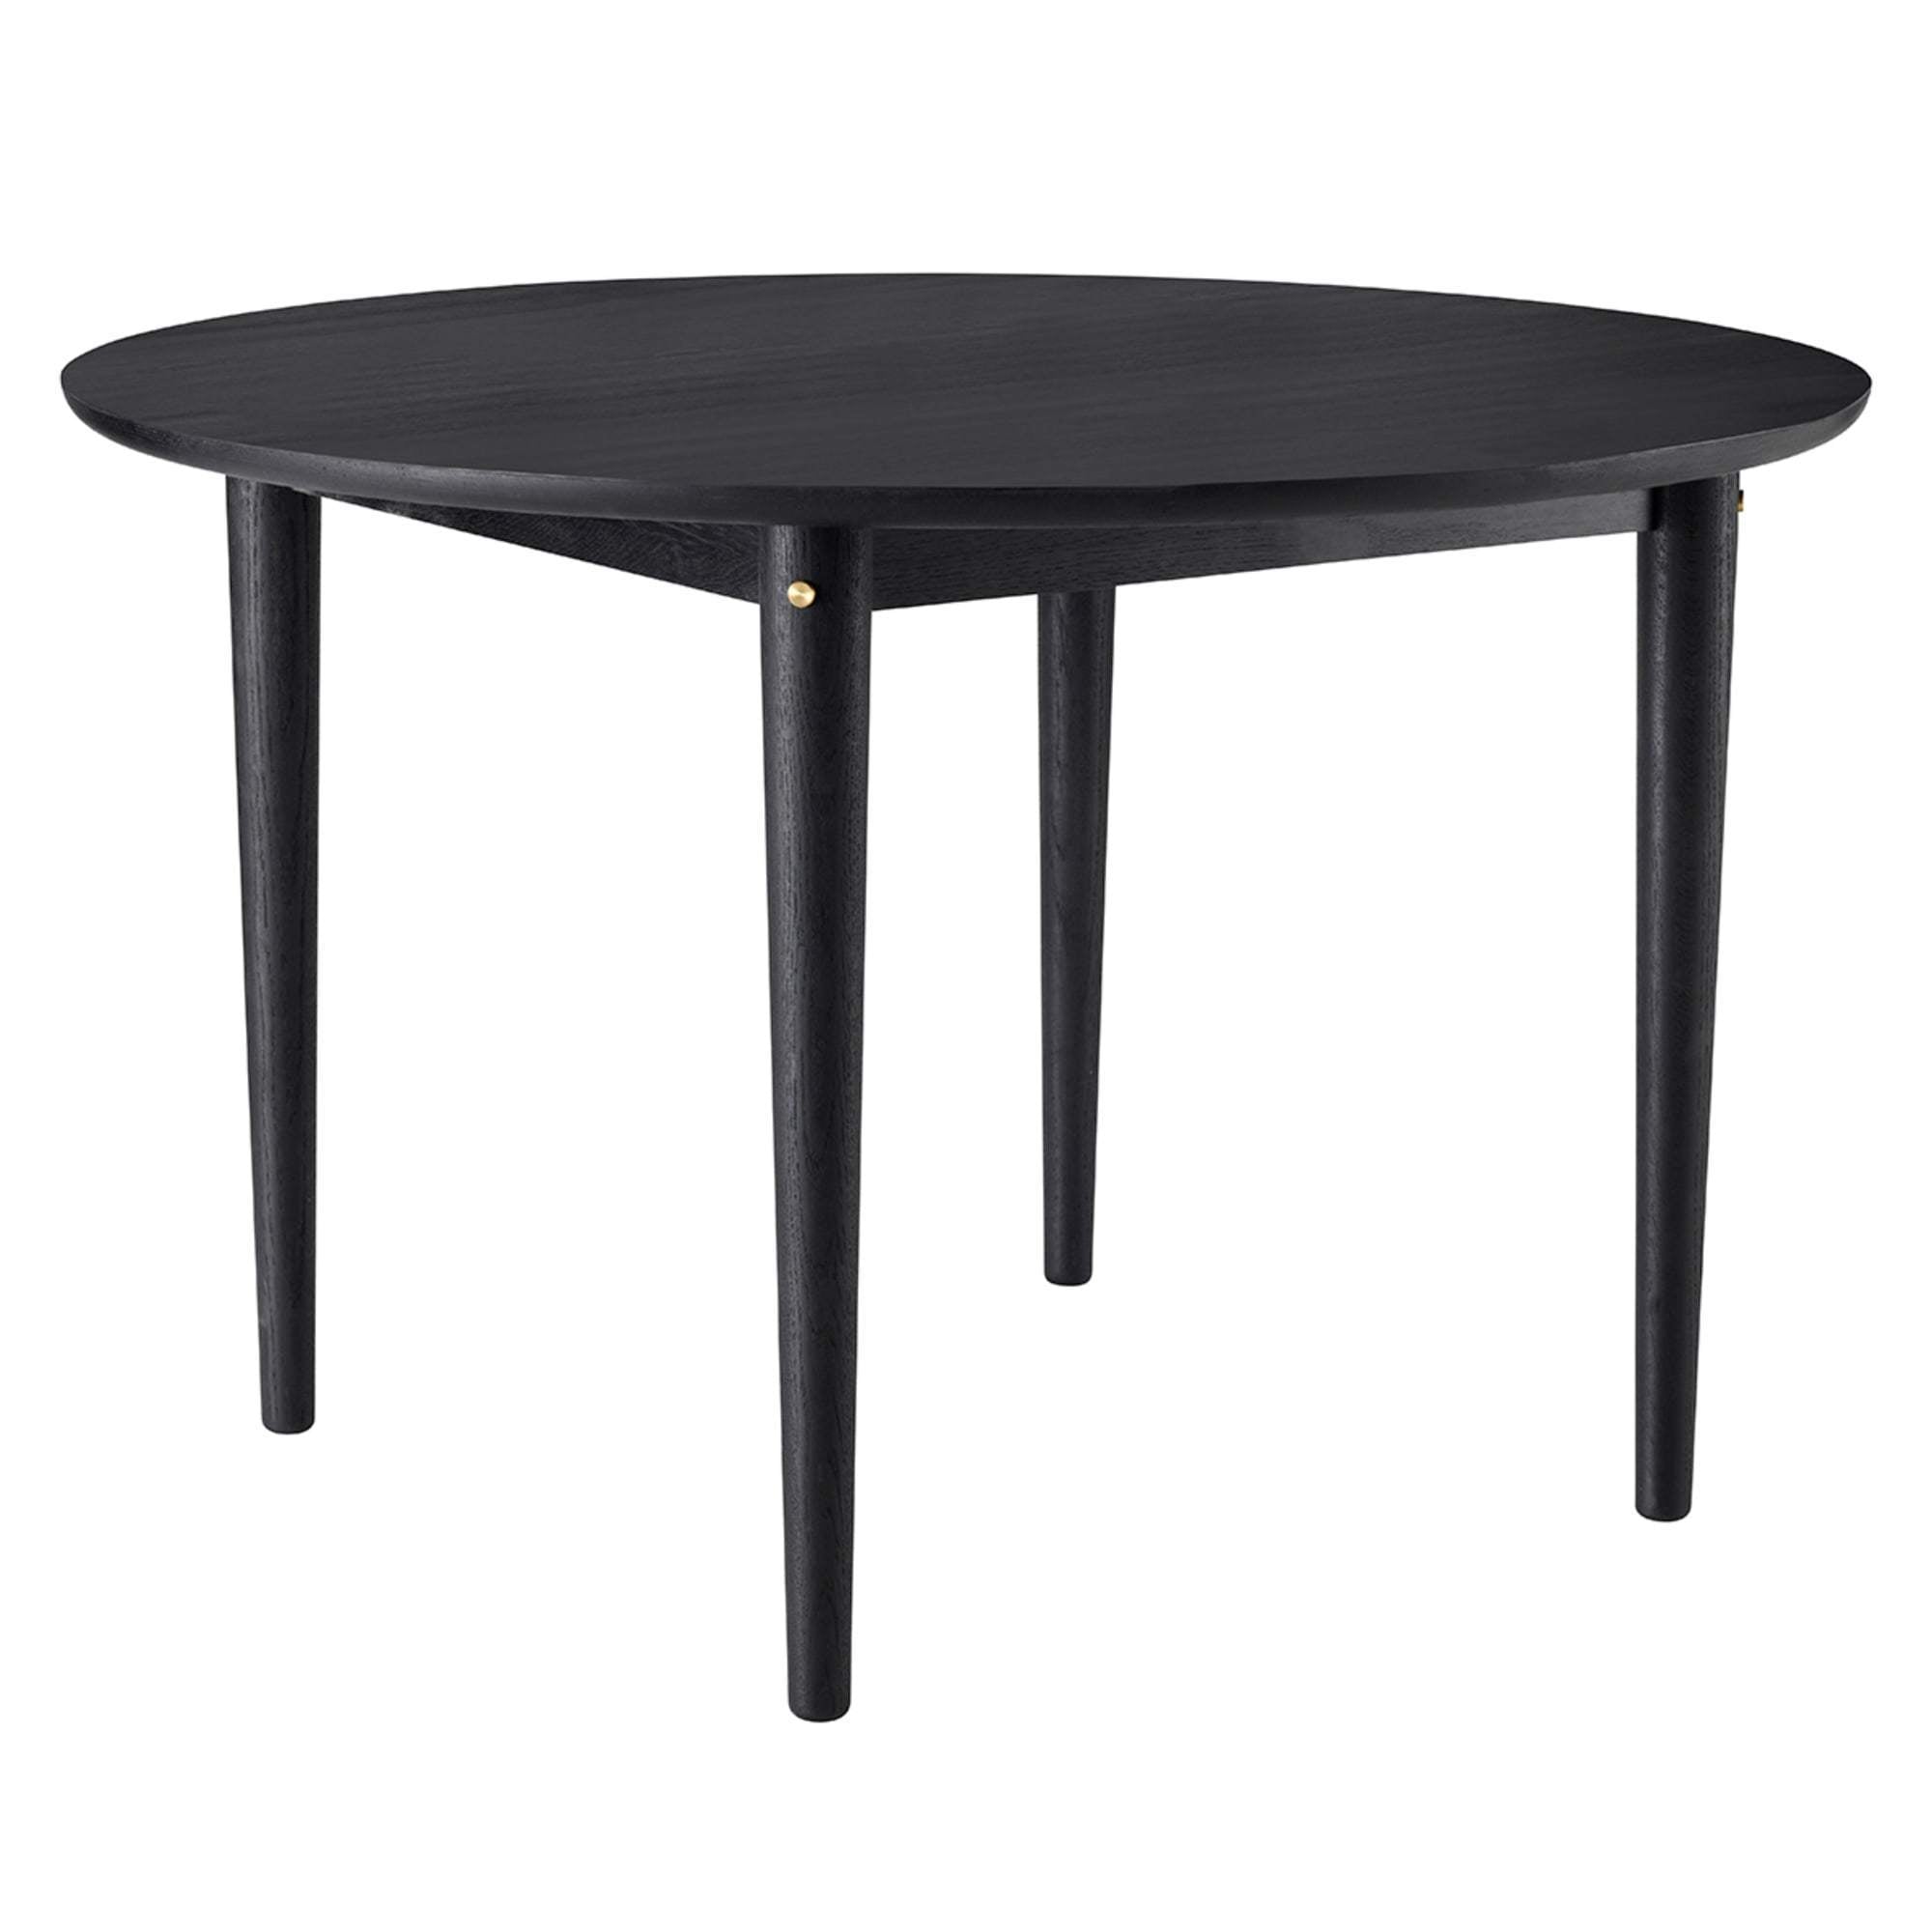 Fdb Møbler C62 Dining Table Black Oak, 120cm